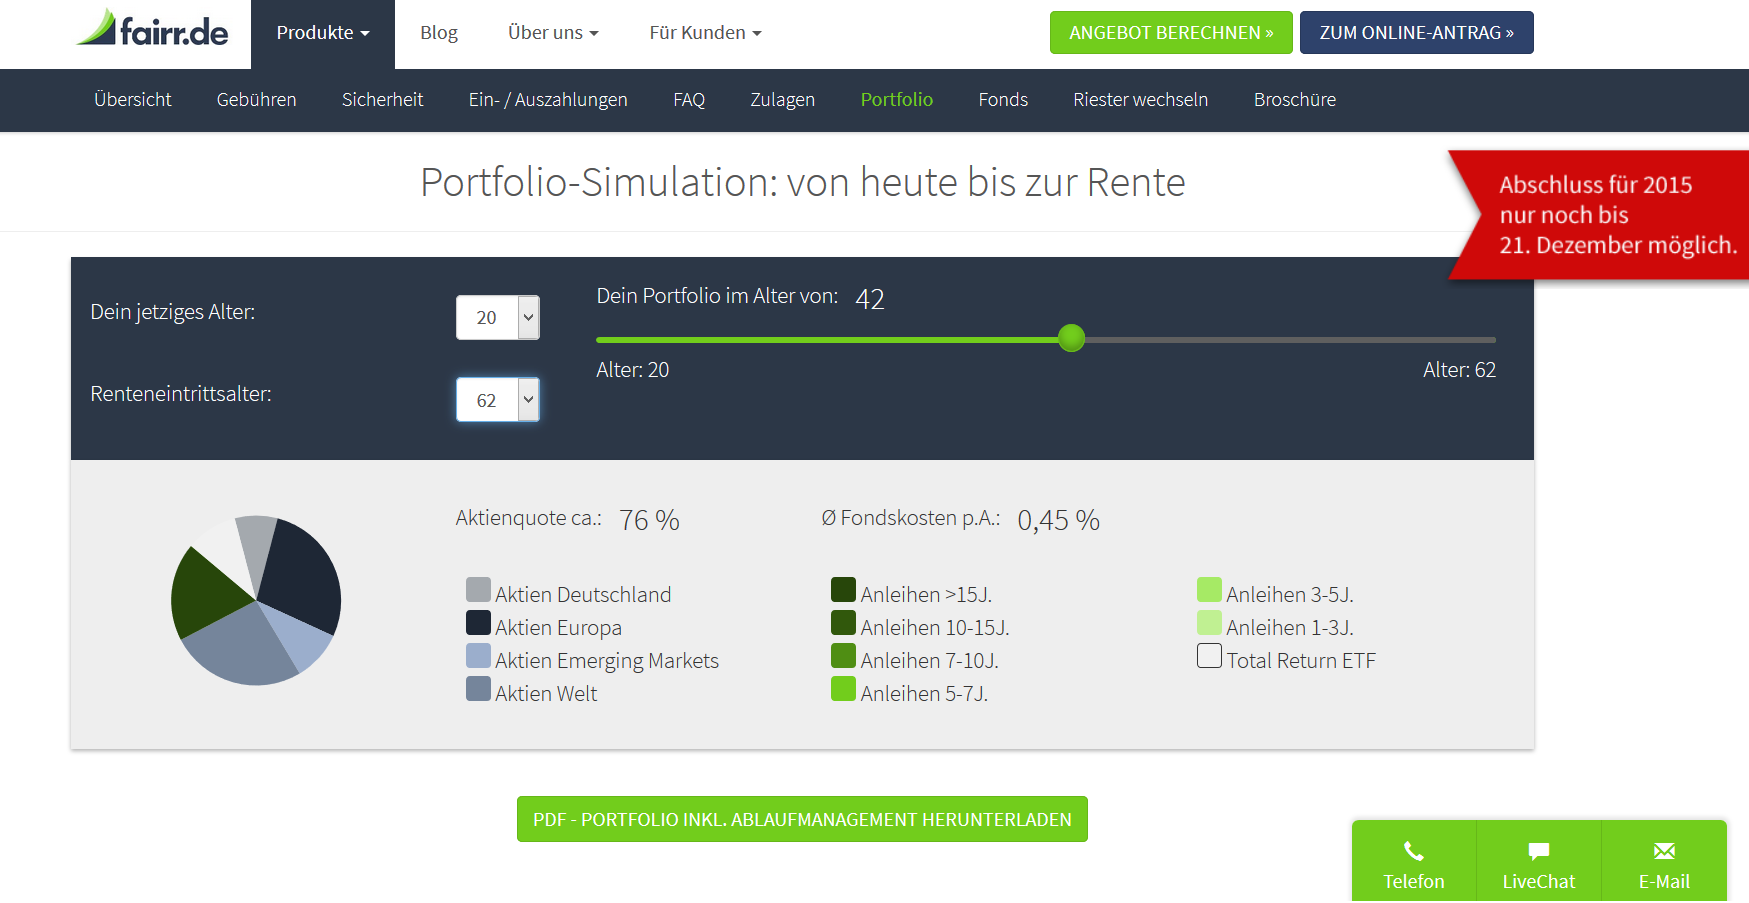 Die Portfolio-Simulation von fairr.de